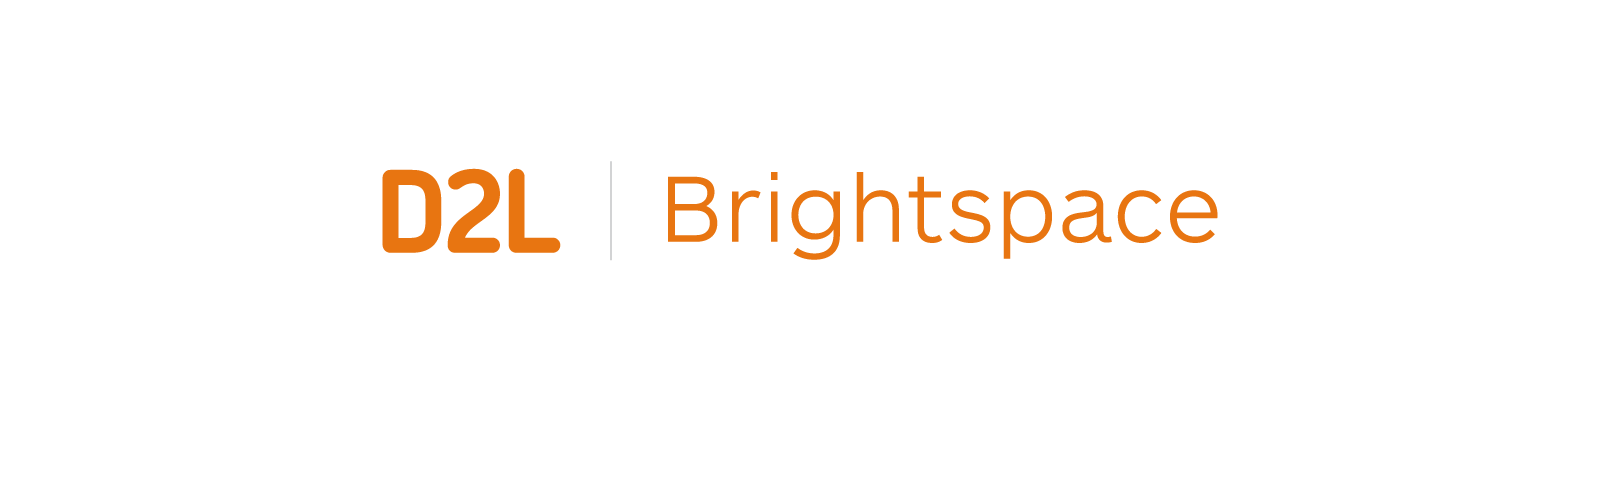 D2L - Brightspace